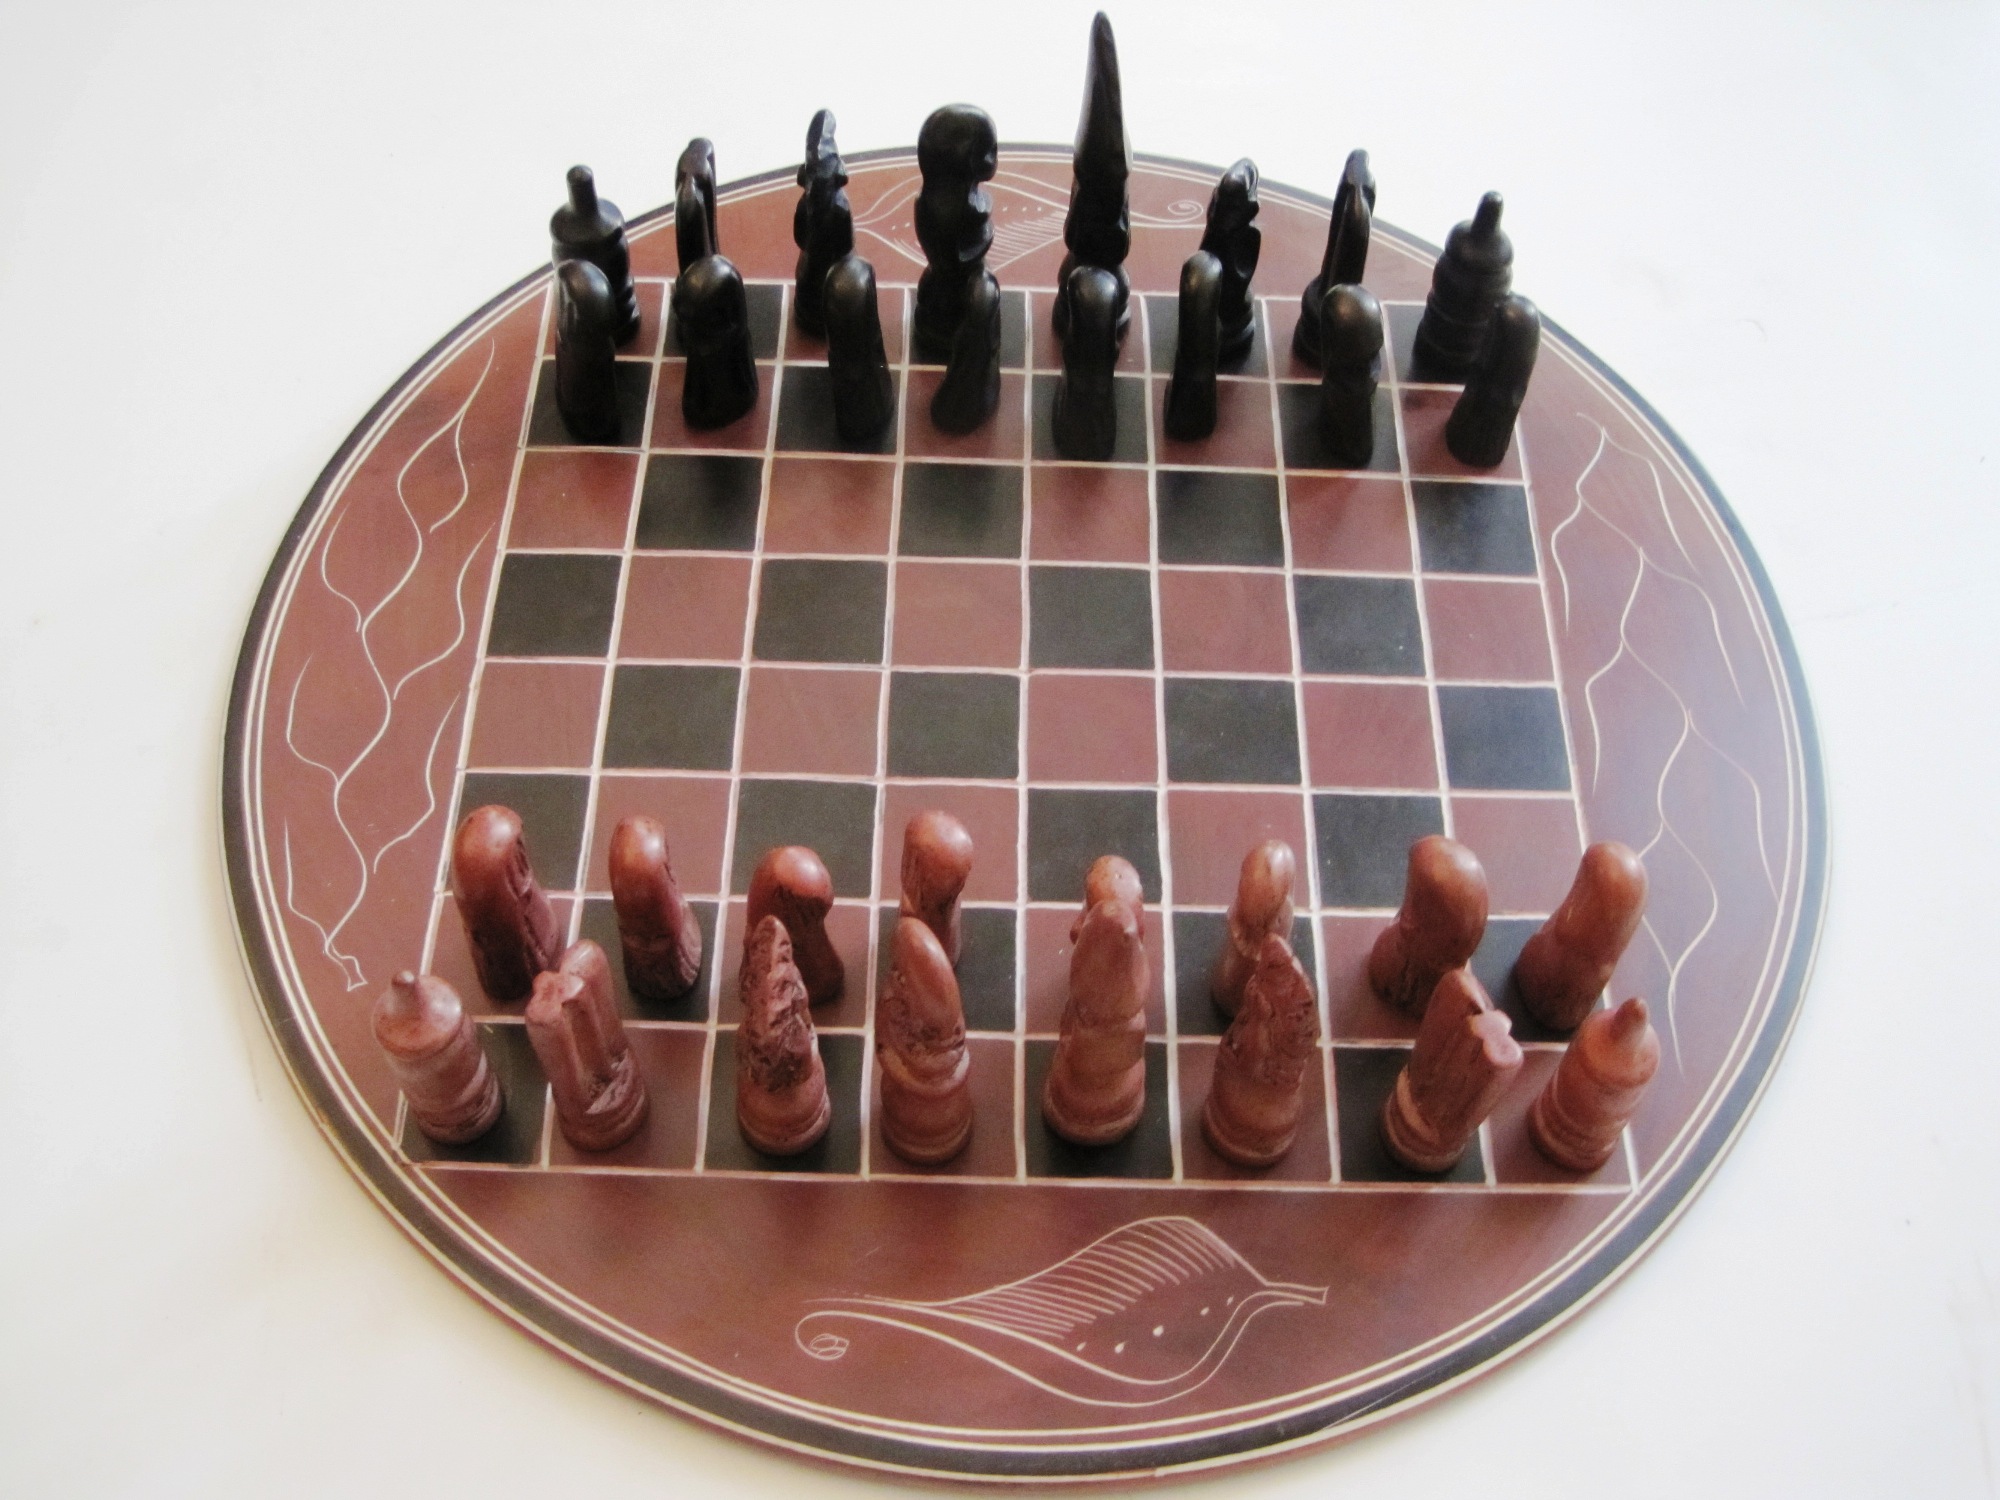 Soapstone Chess Sets